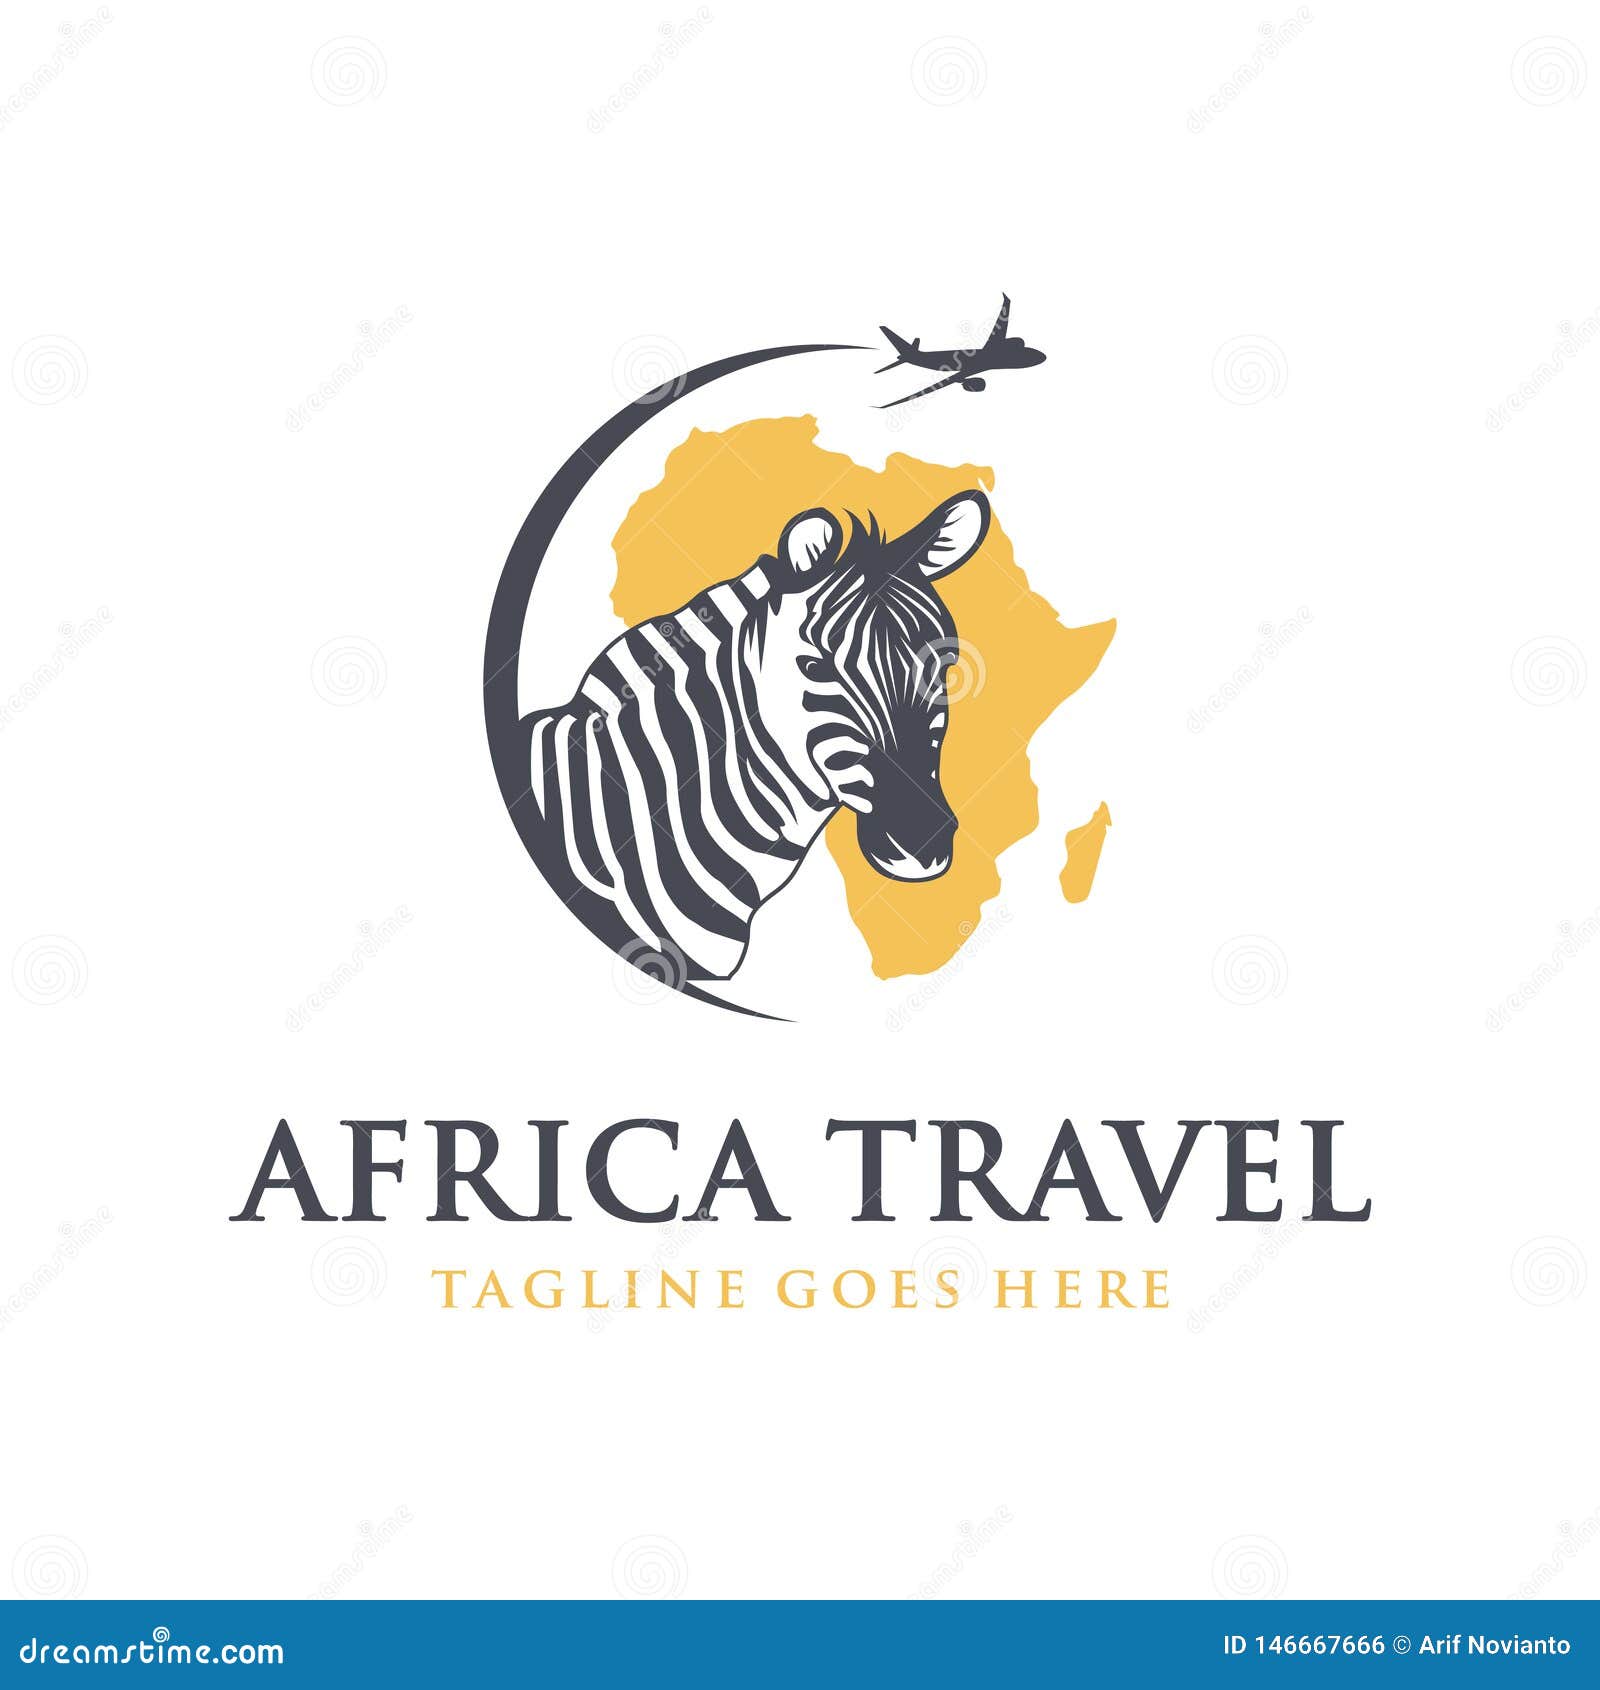 international travel agency in africa